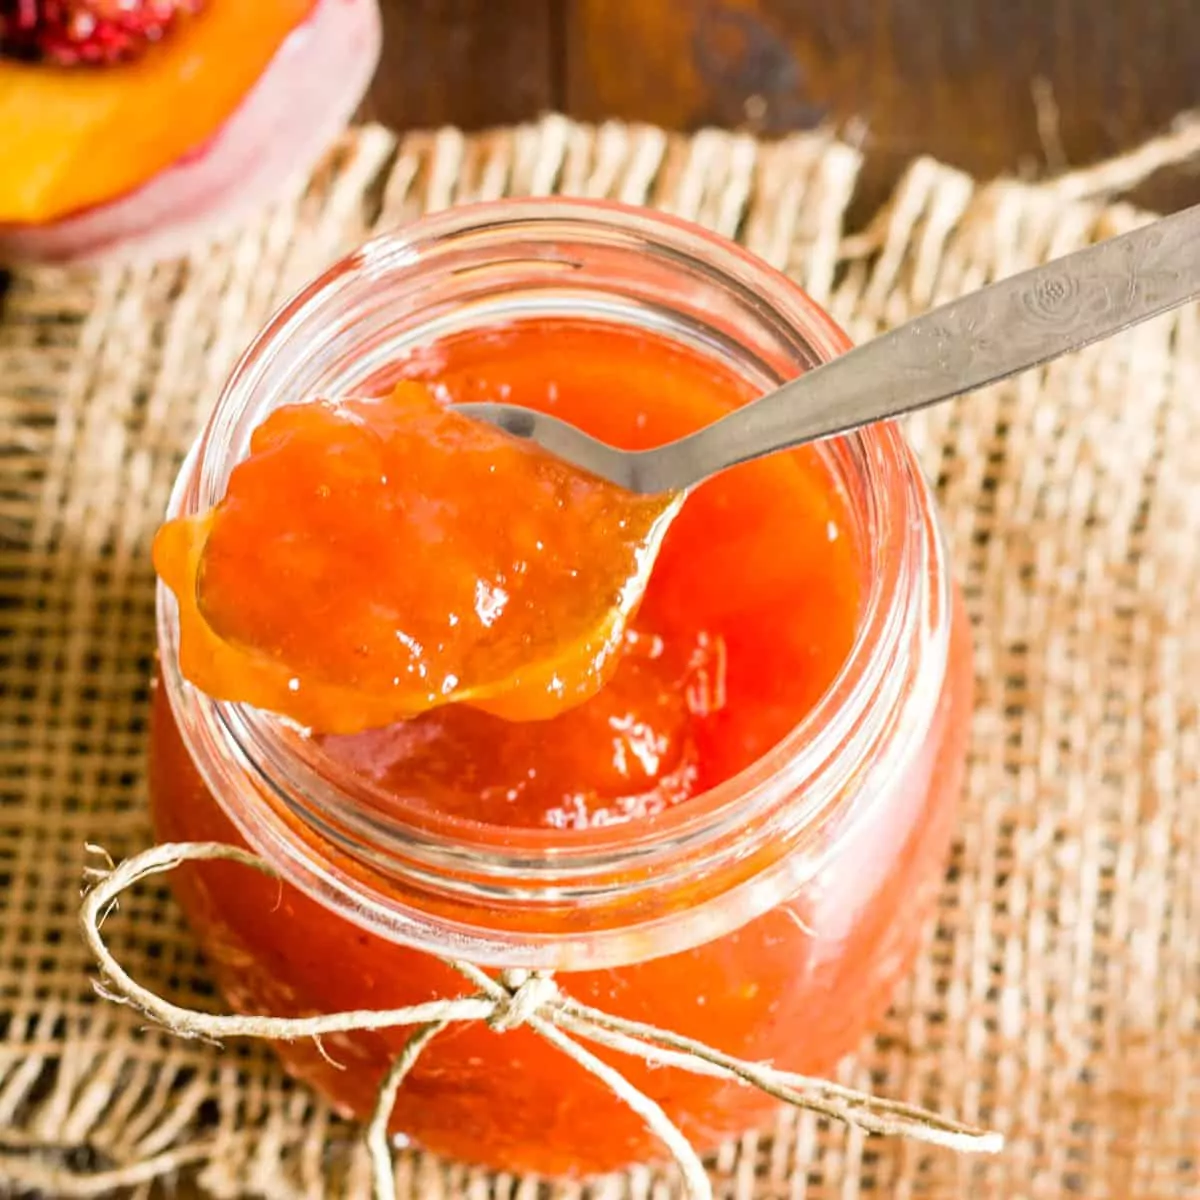 peach jam in jar with spoon.